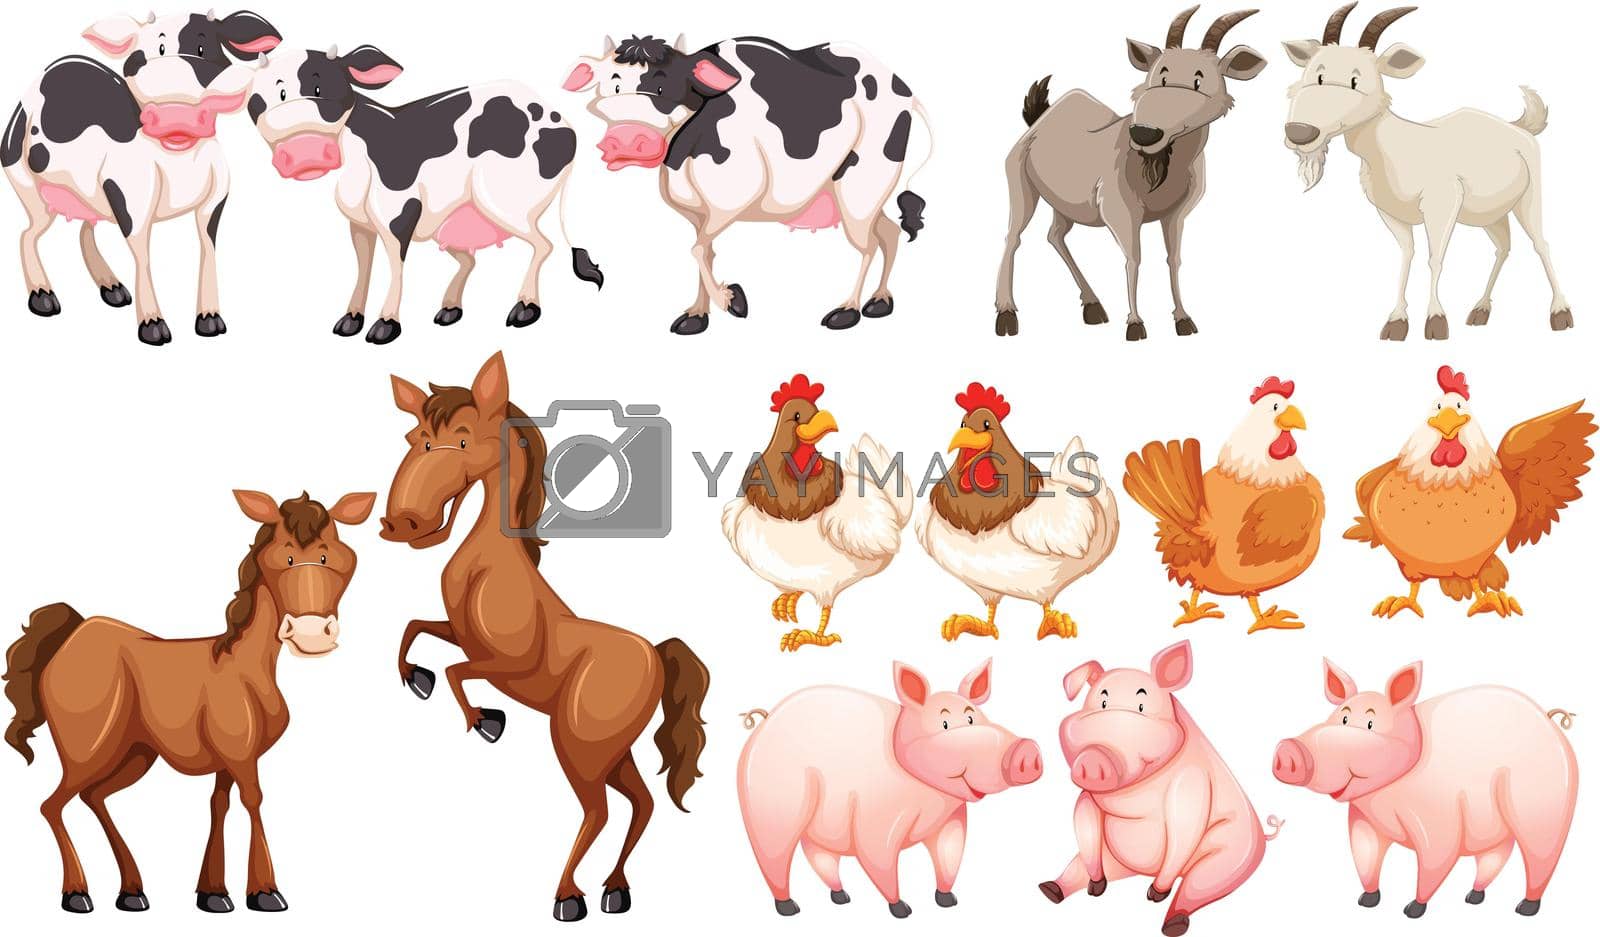 Different animals in the farm illustration